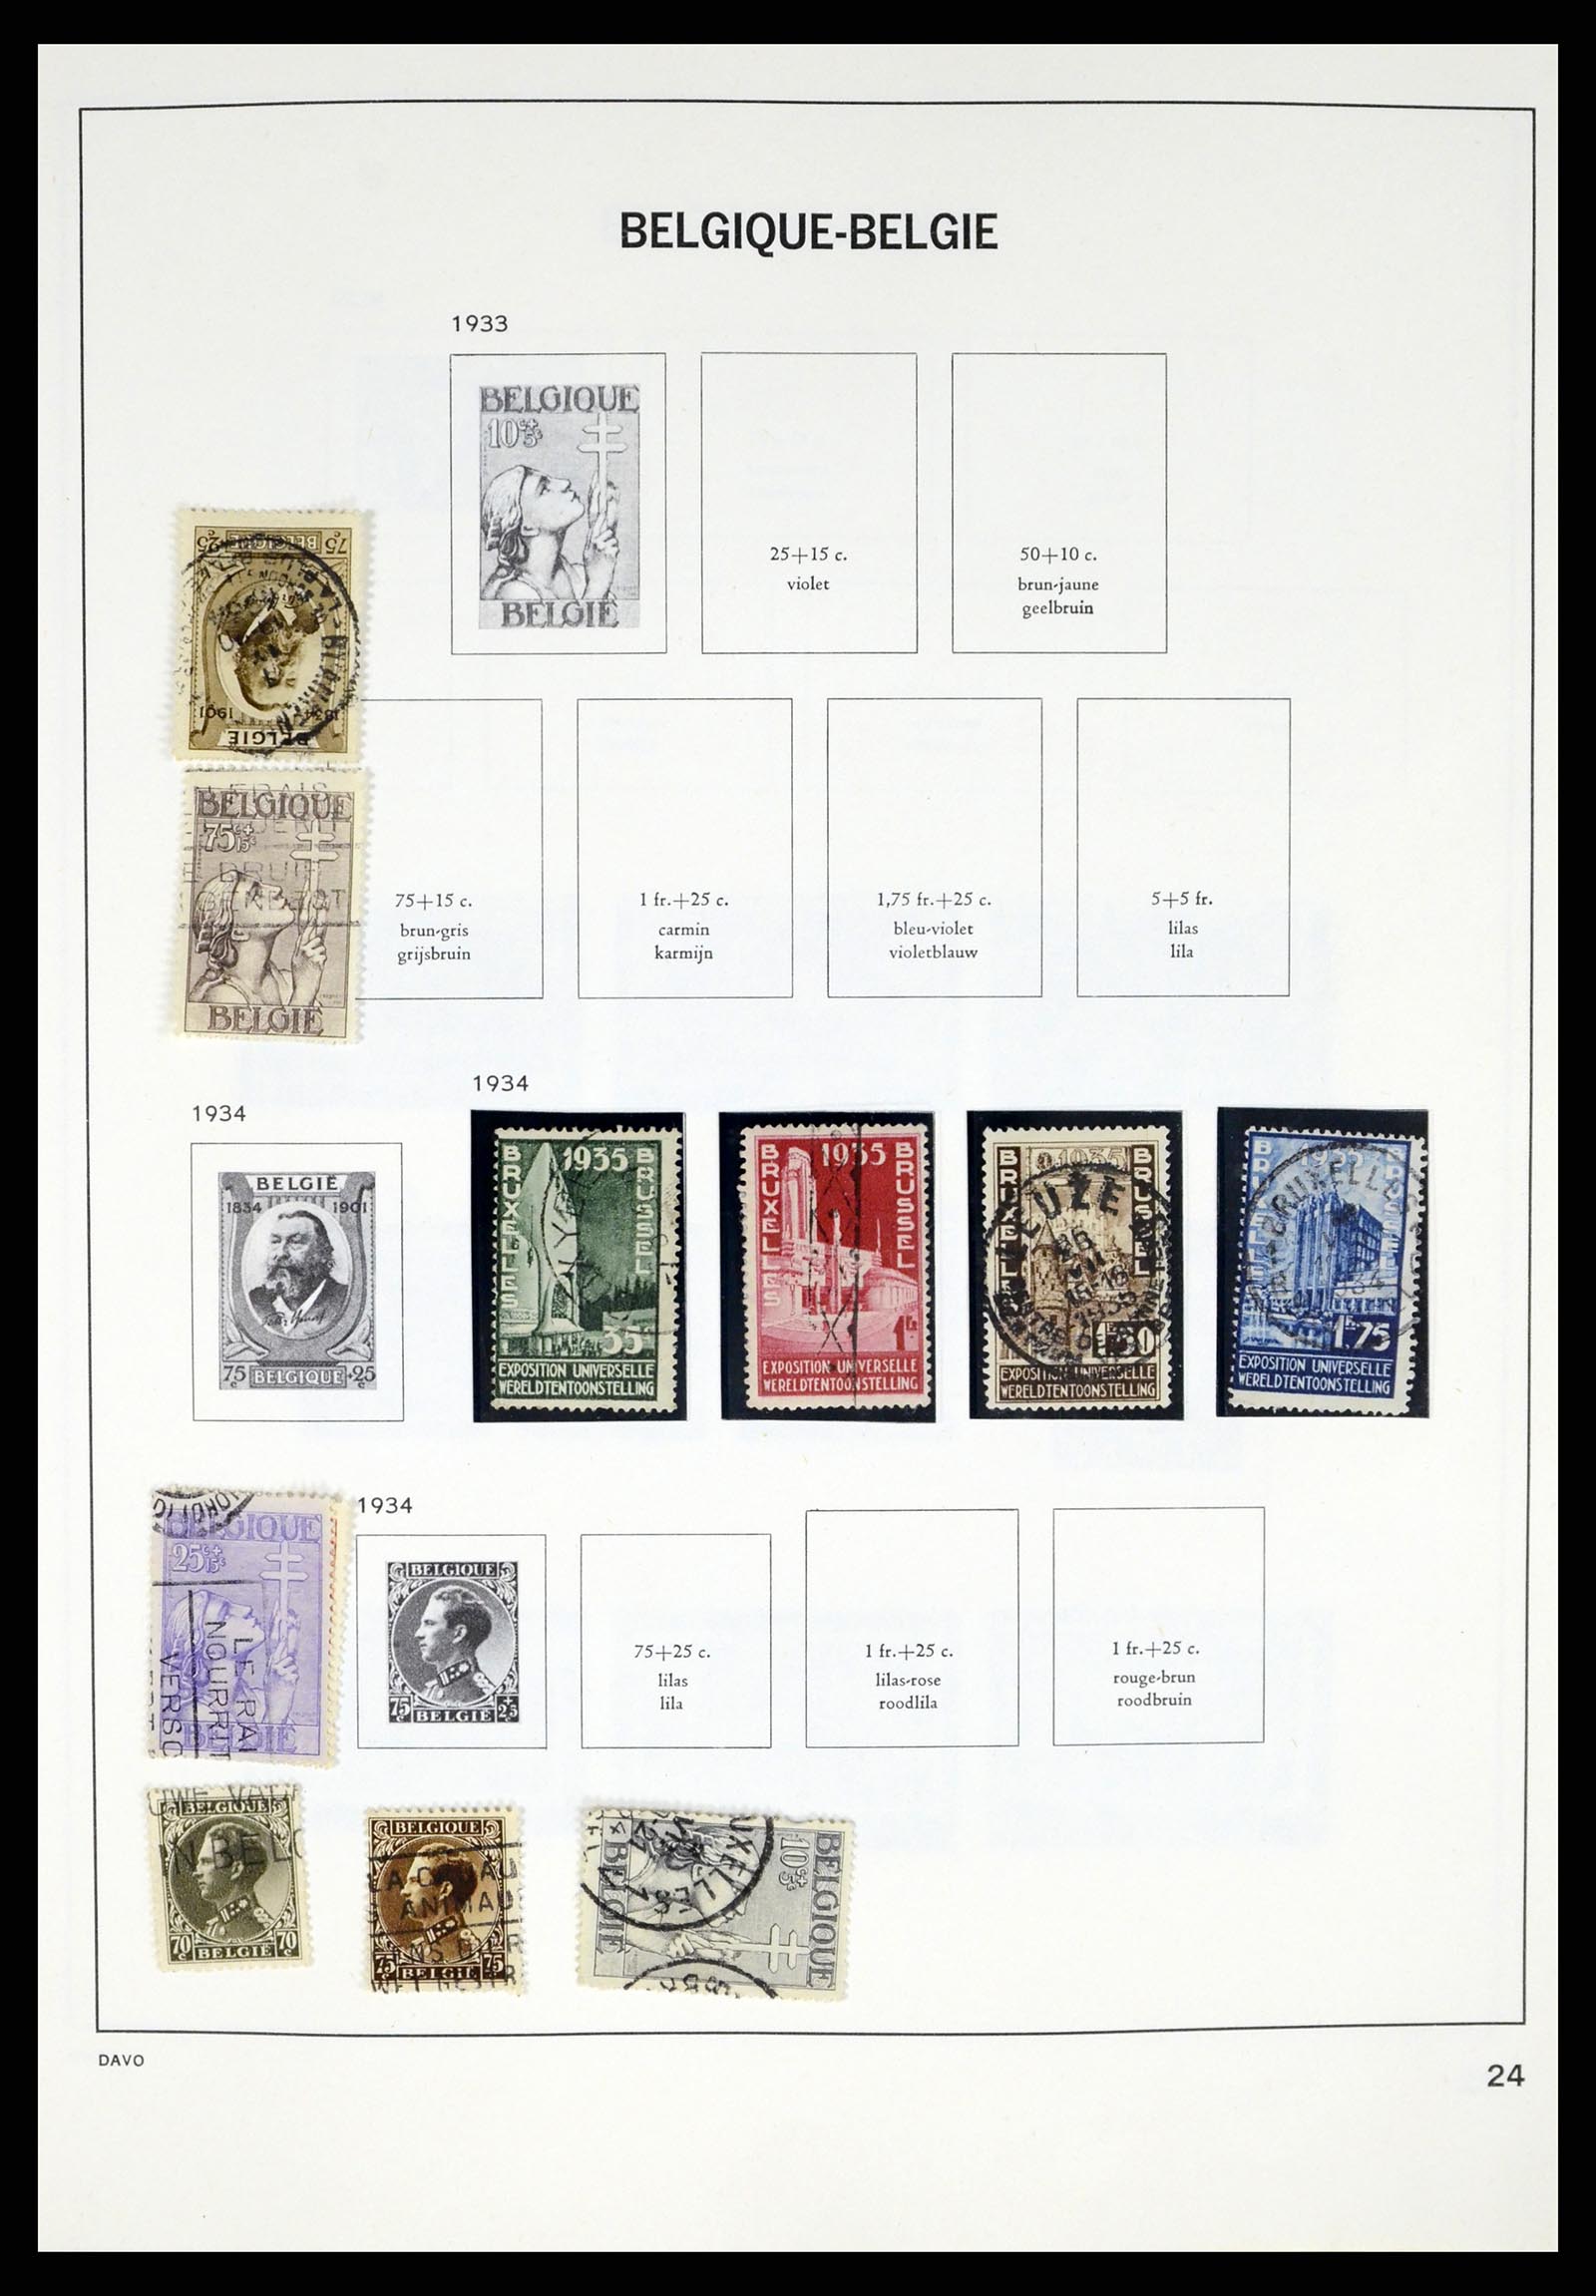 37367 022 - Stamp collection 37367 Belgium 1849-2003.